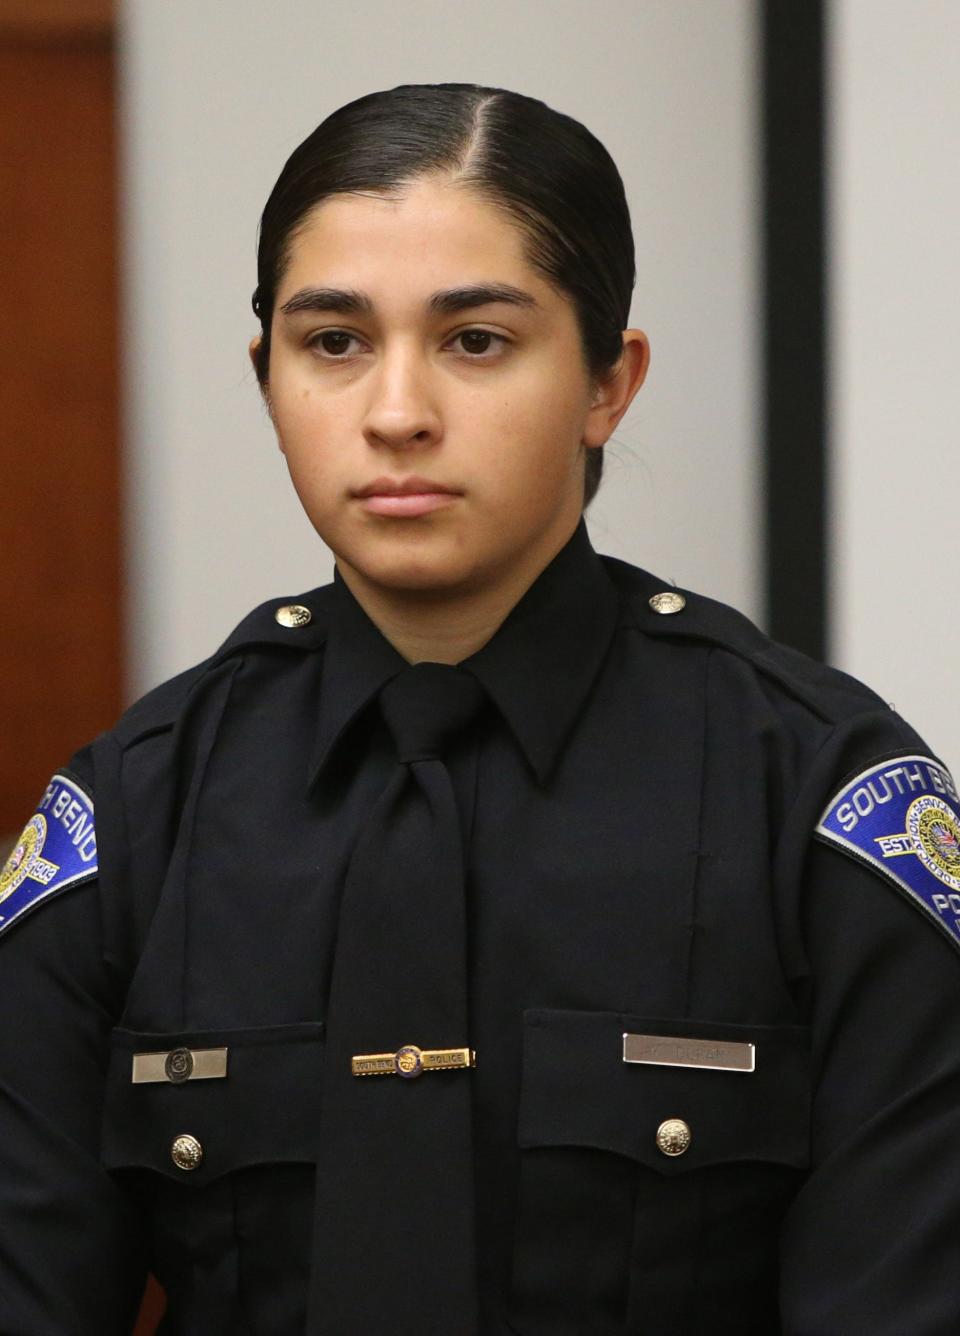 South Bend Police Officer Kassandra Duran